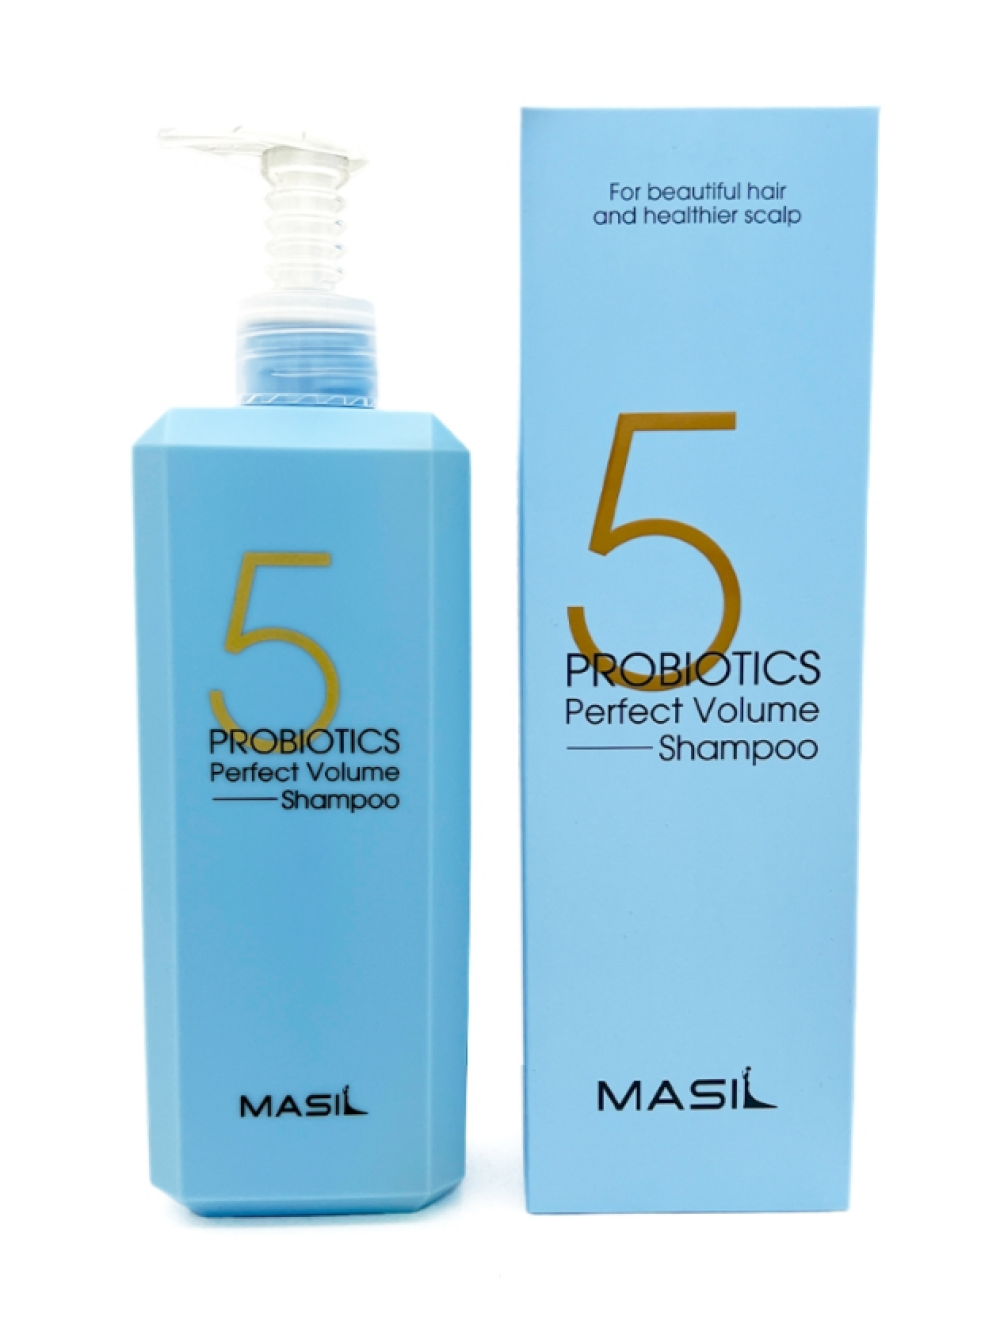 Шампунь для объема волос с пробиотиками 5 Probiotics Perfect Volume Shampoo Masil, 500 мл